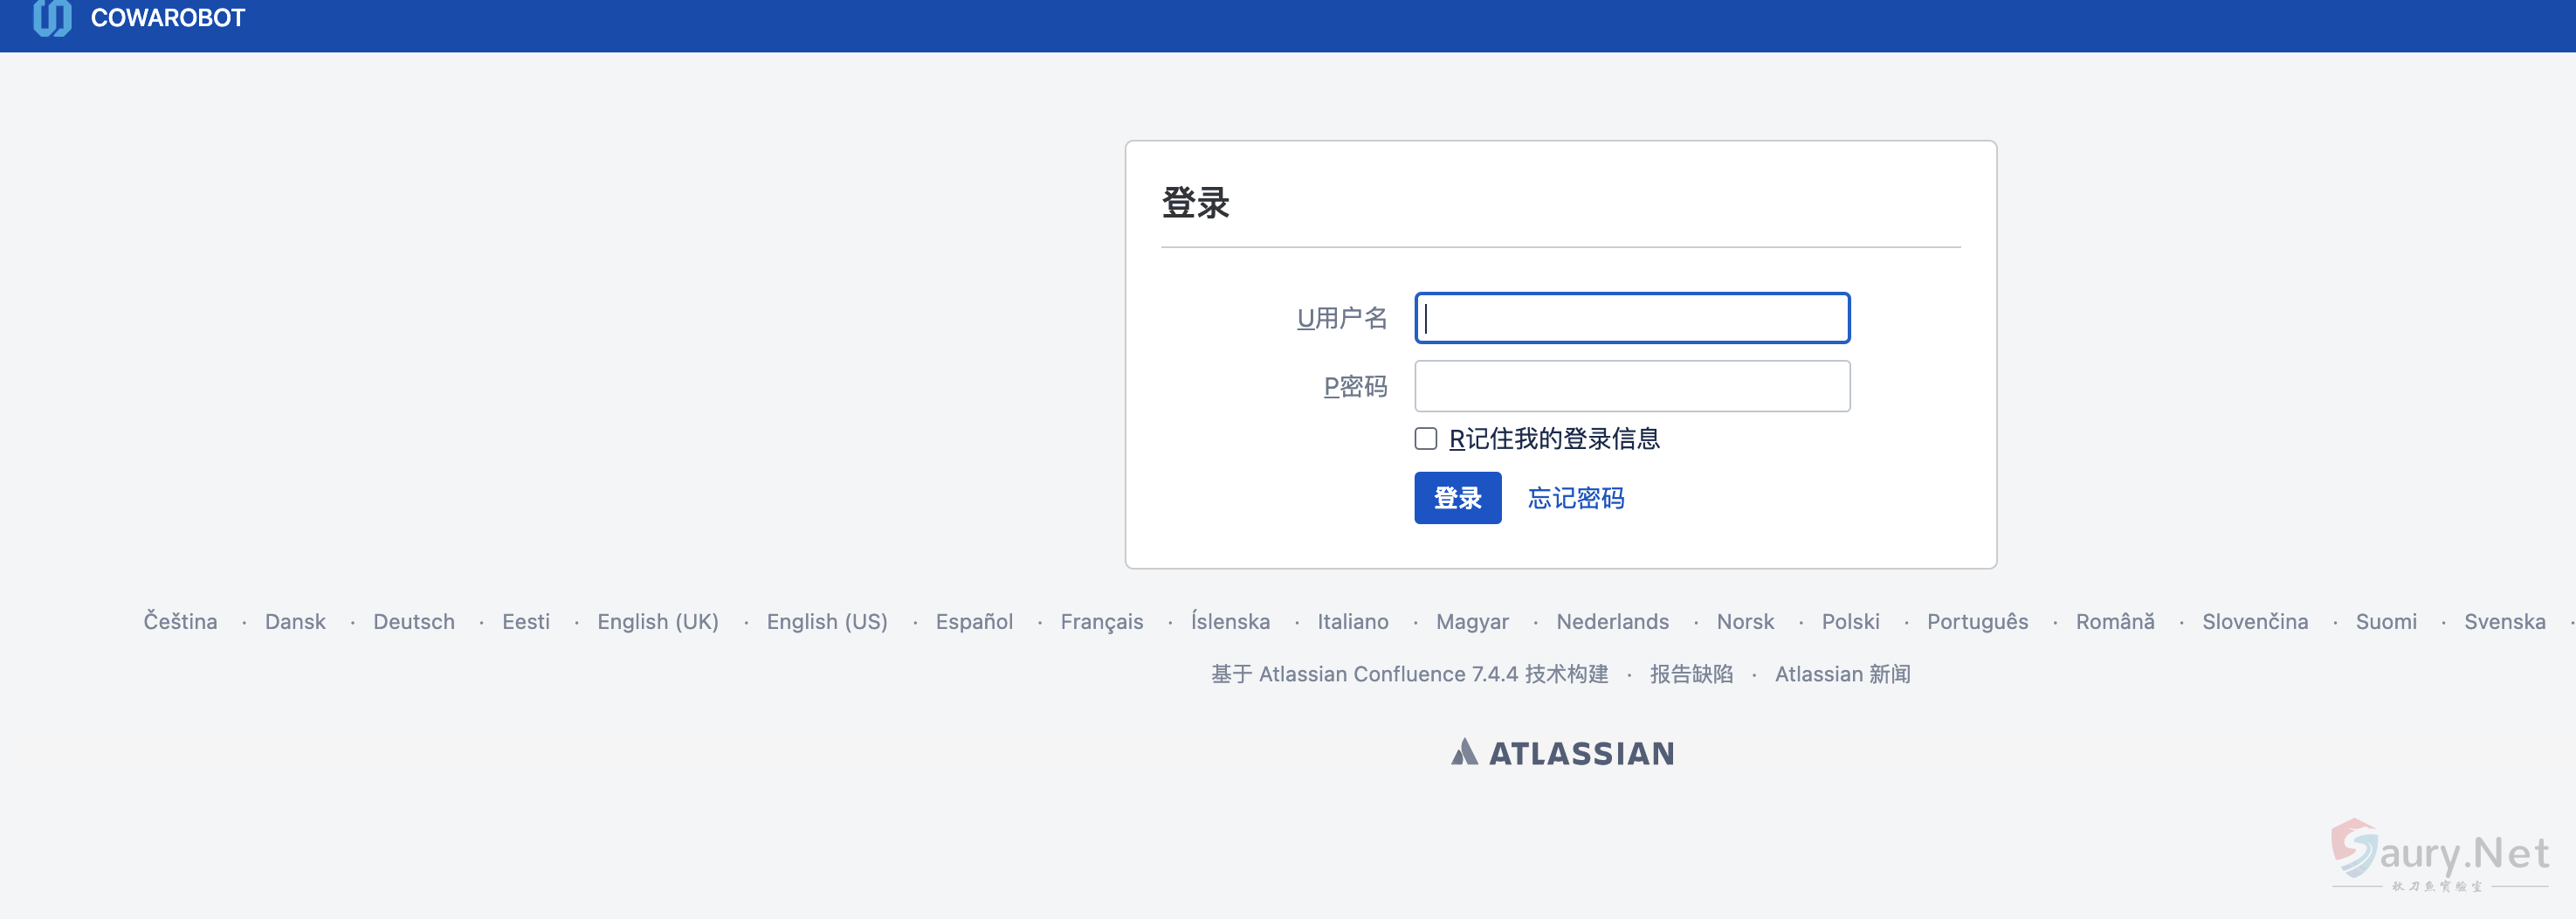 Atlassian Confluence OGNL注入漏洞 #CVE-2022-26134-秋刀鱼实验室